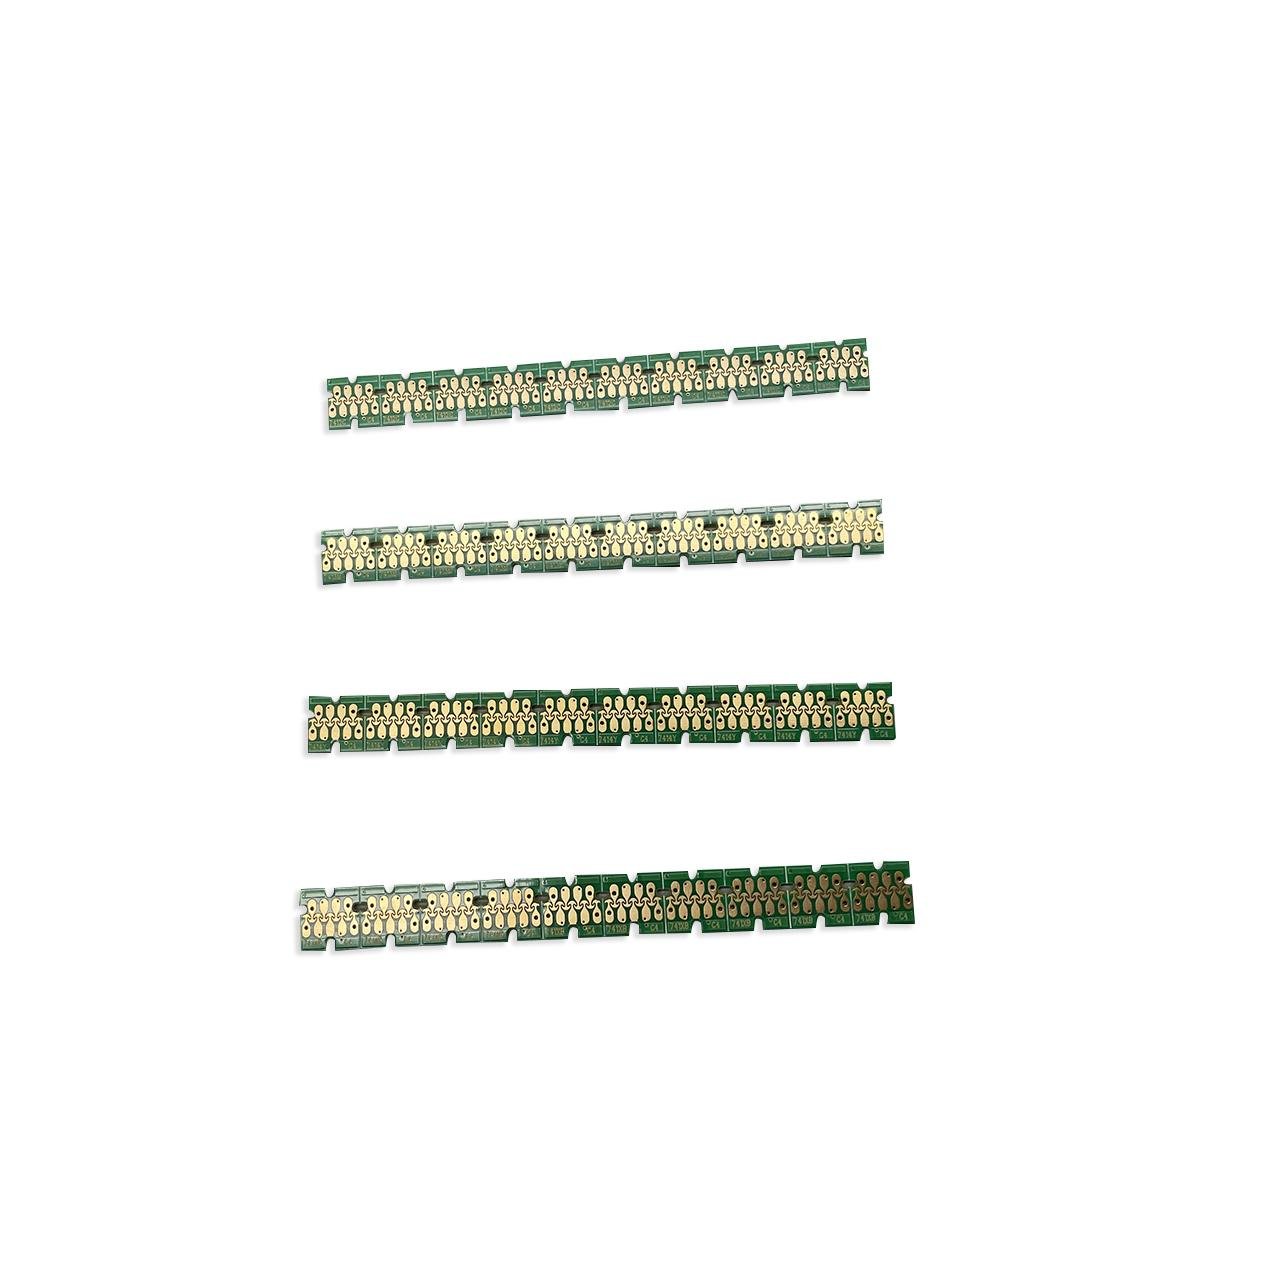 Cartridges resettable chip for epson WorkForce Pro WF-C878R/879R Series printer